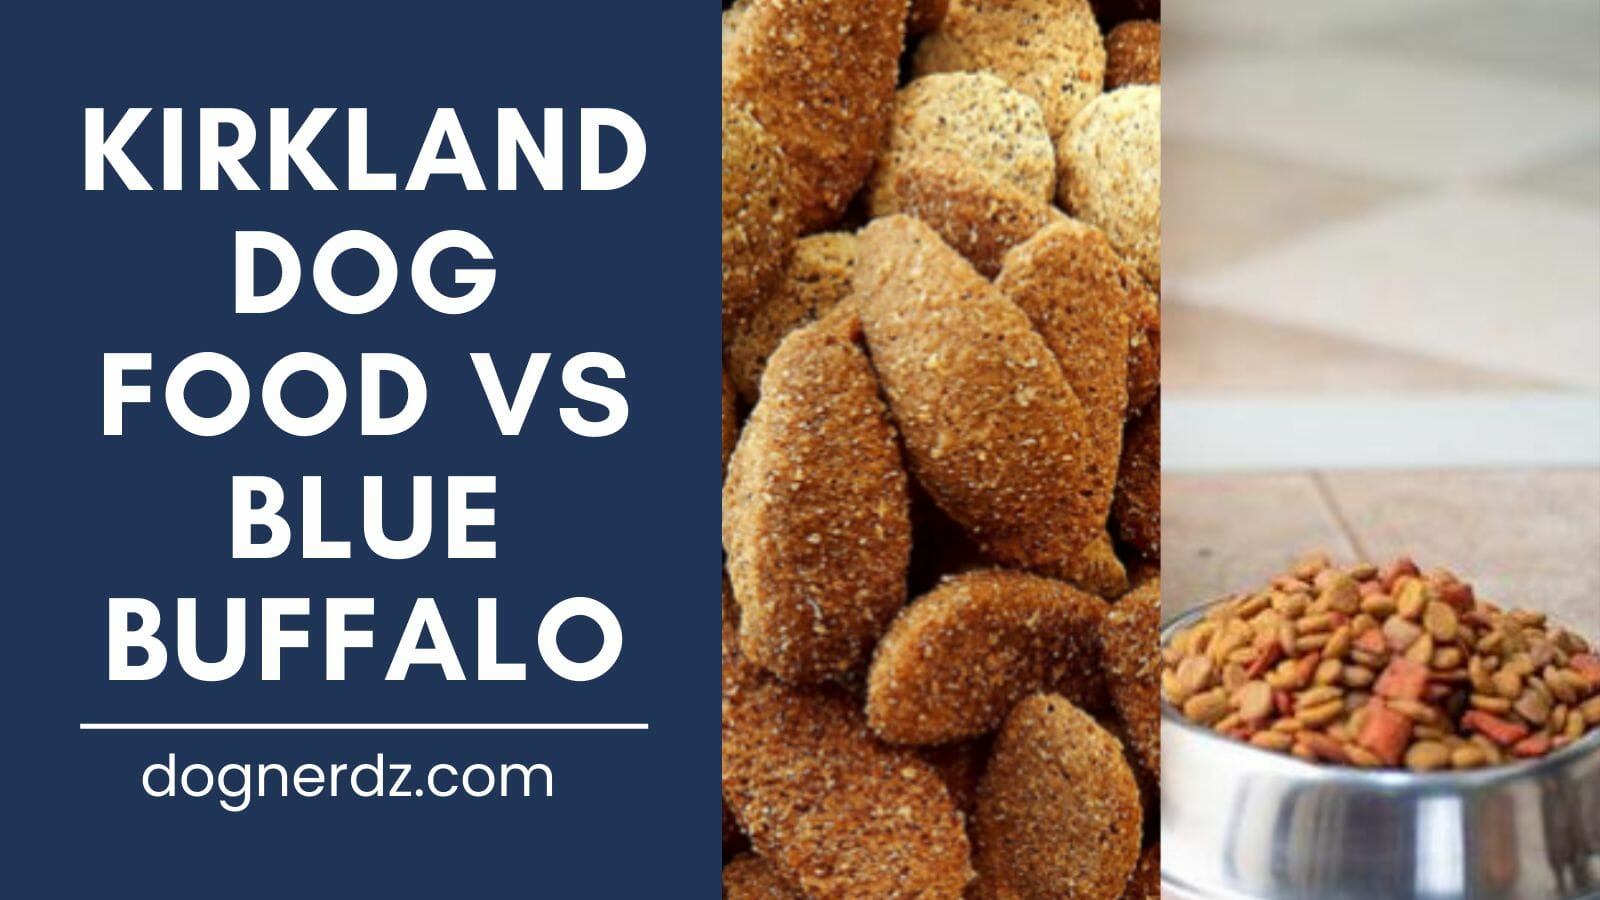 kirkland dog food vs blue buffalo - is there a better choice